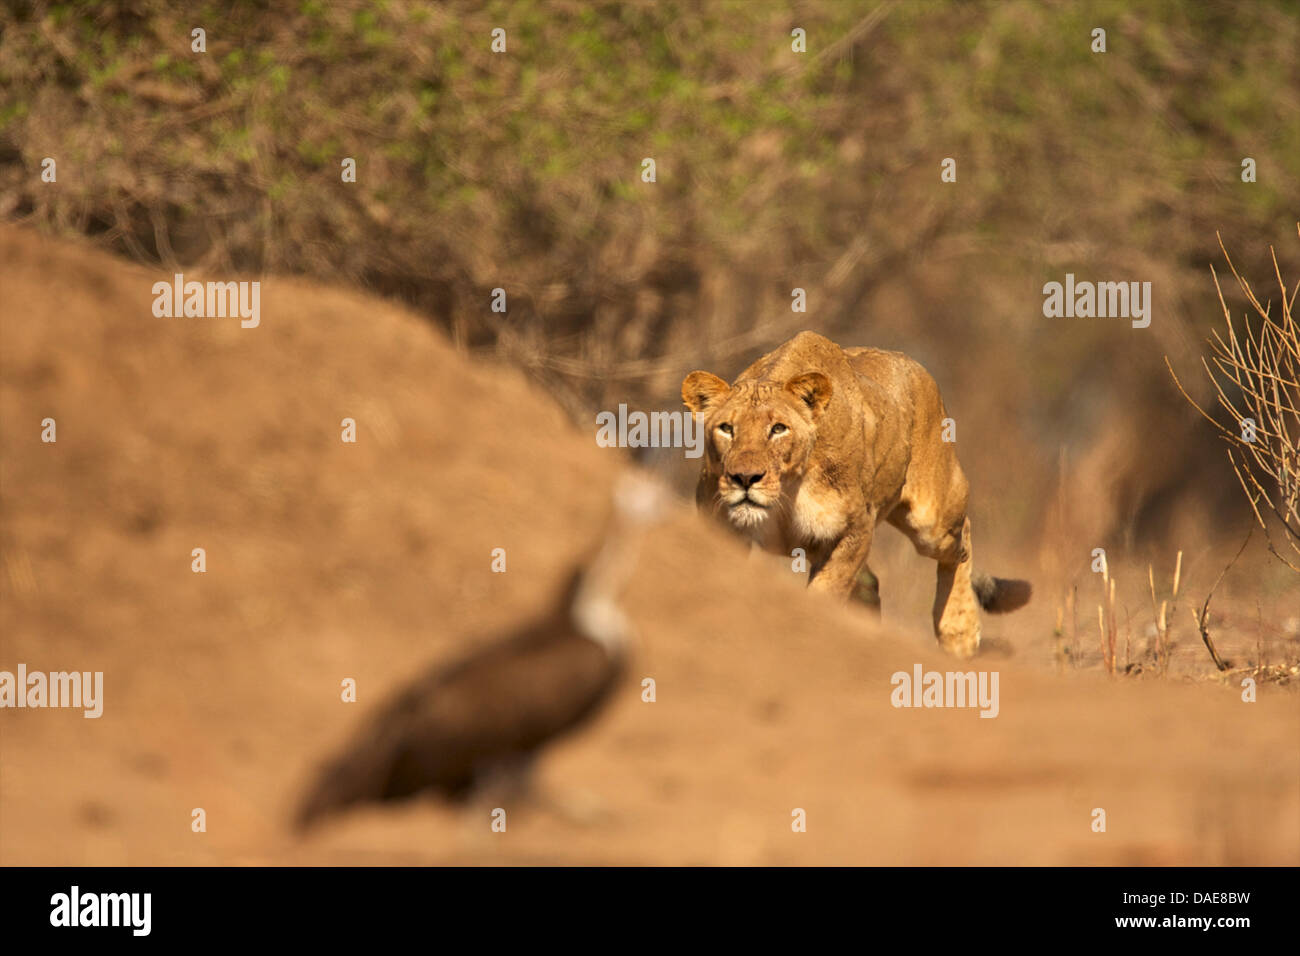 Lionne stalking bird, Mana Pools National Park, Zimbabwe, Africa Banque D'Images